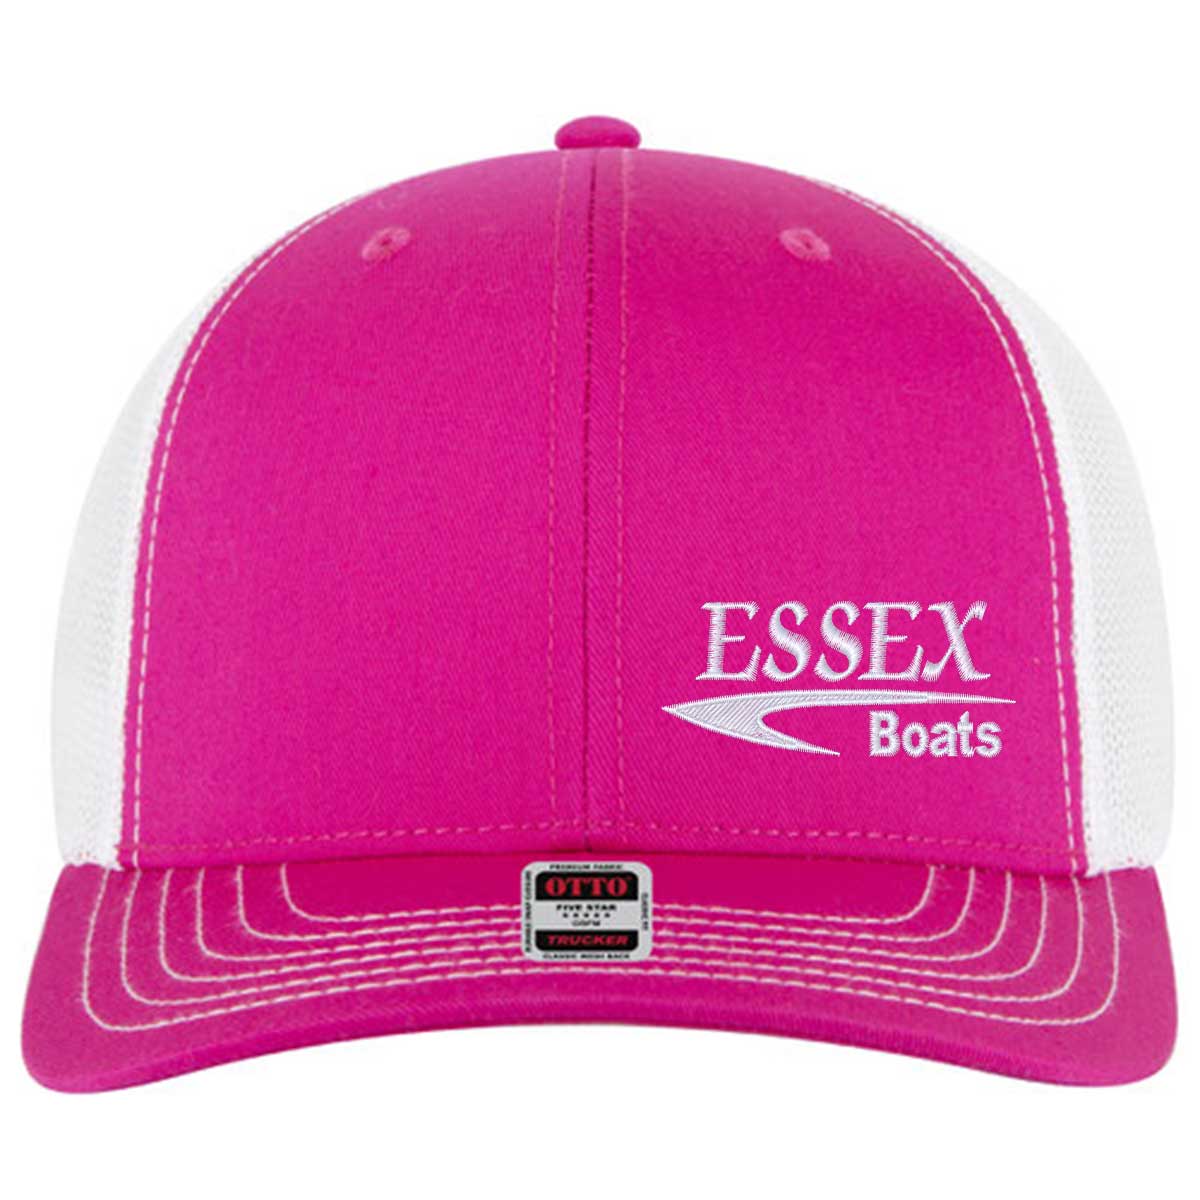 Essex Performance Boats Side Panel Logo Snapback